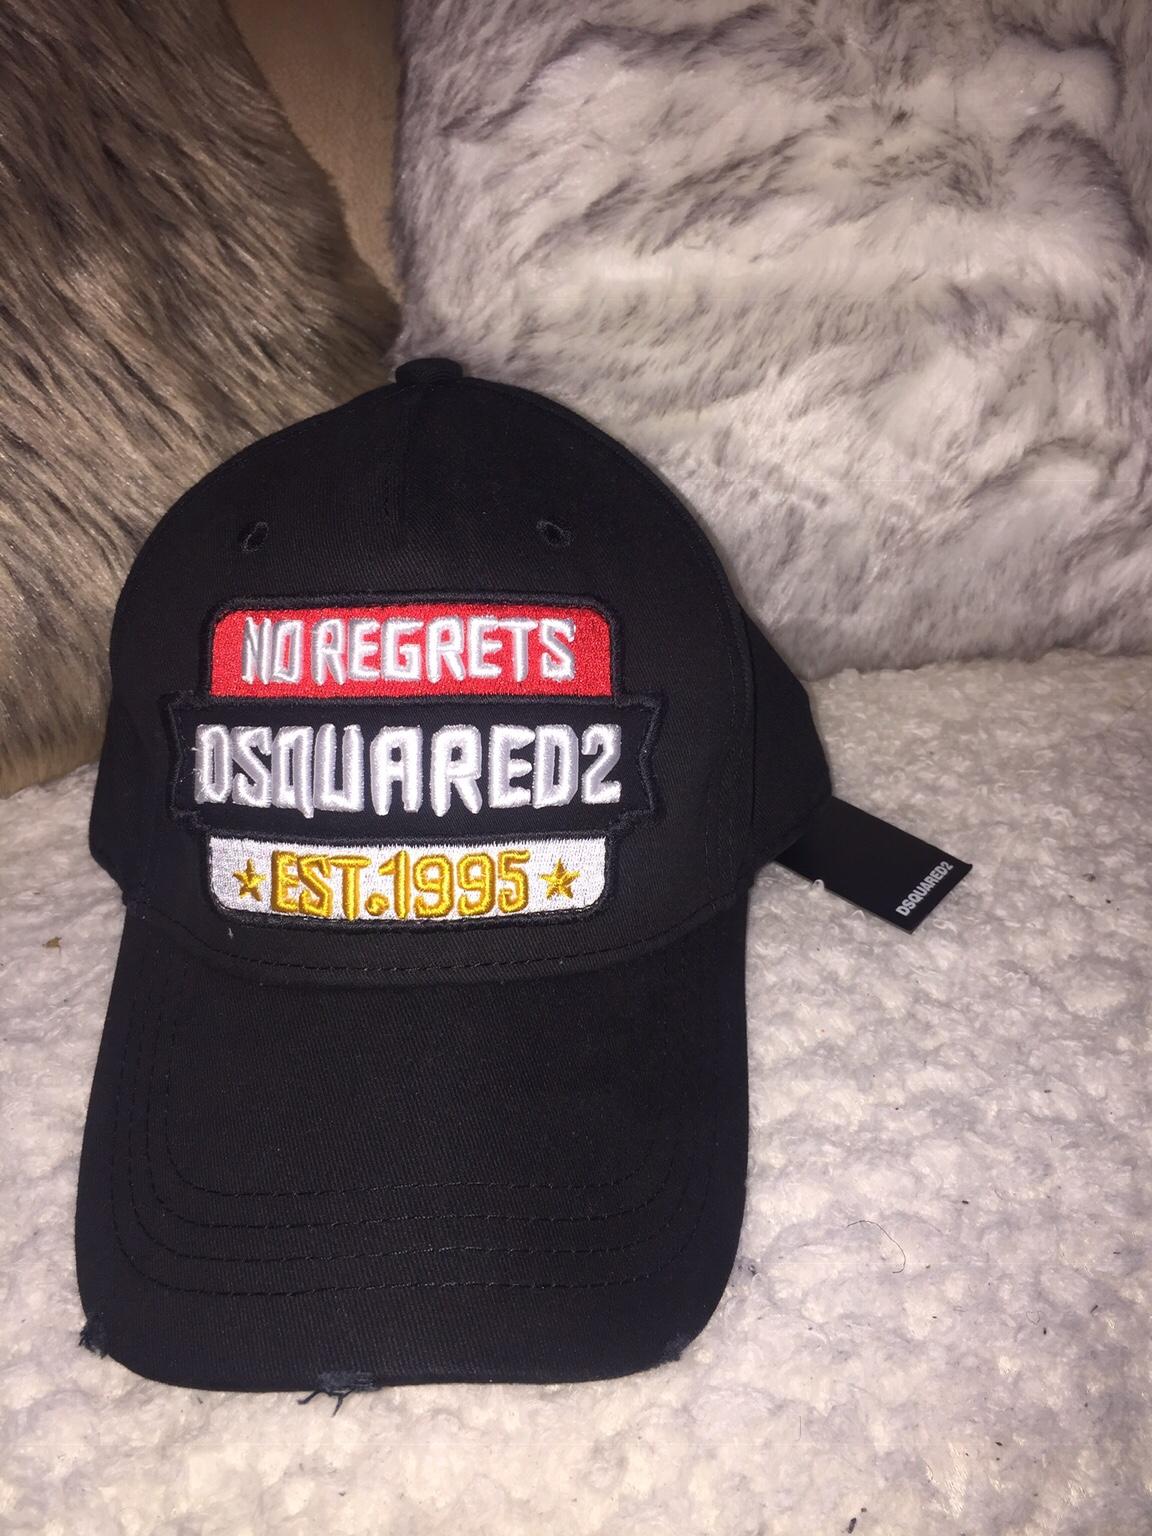 No regrets Dsquared2 cap in SE18 London 